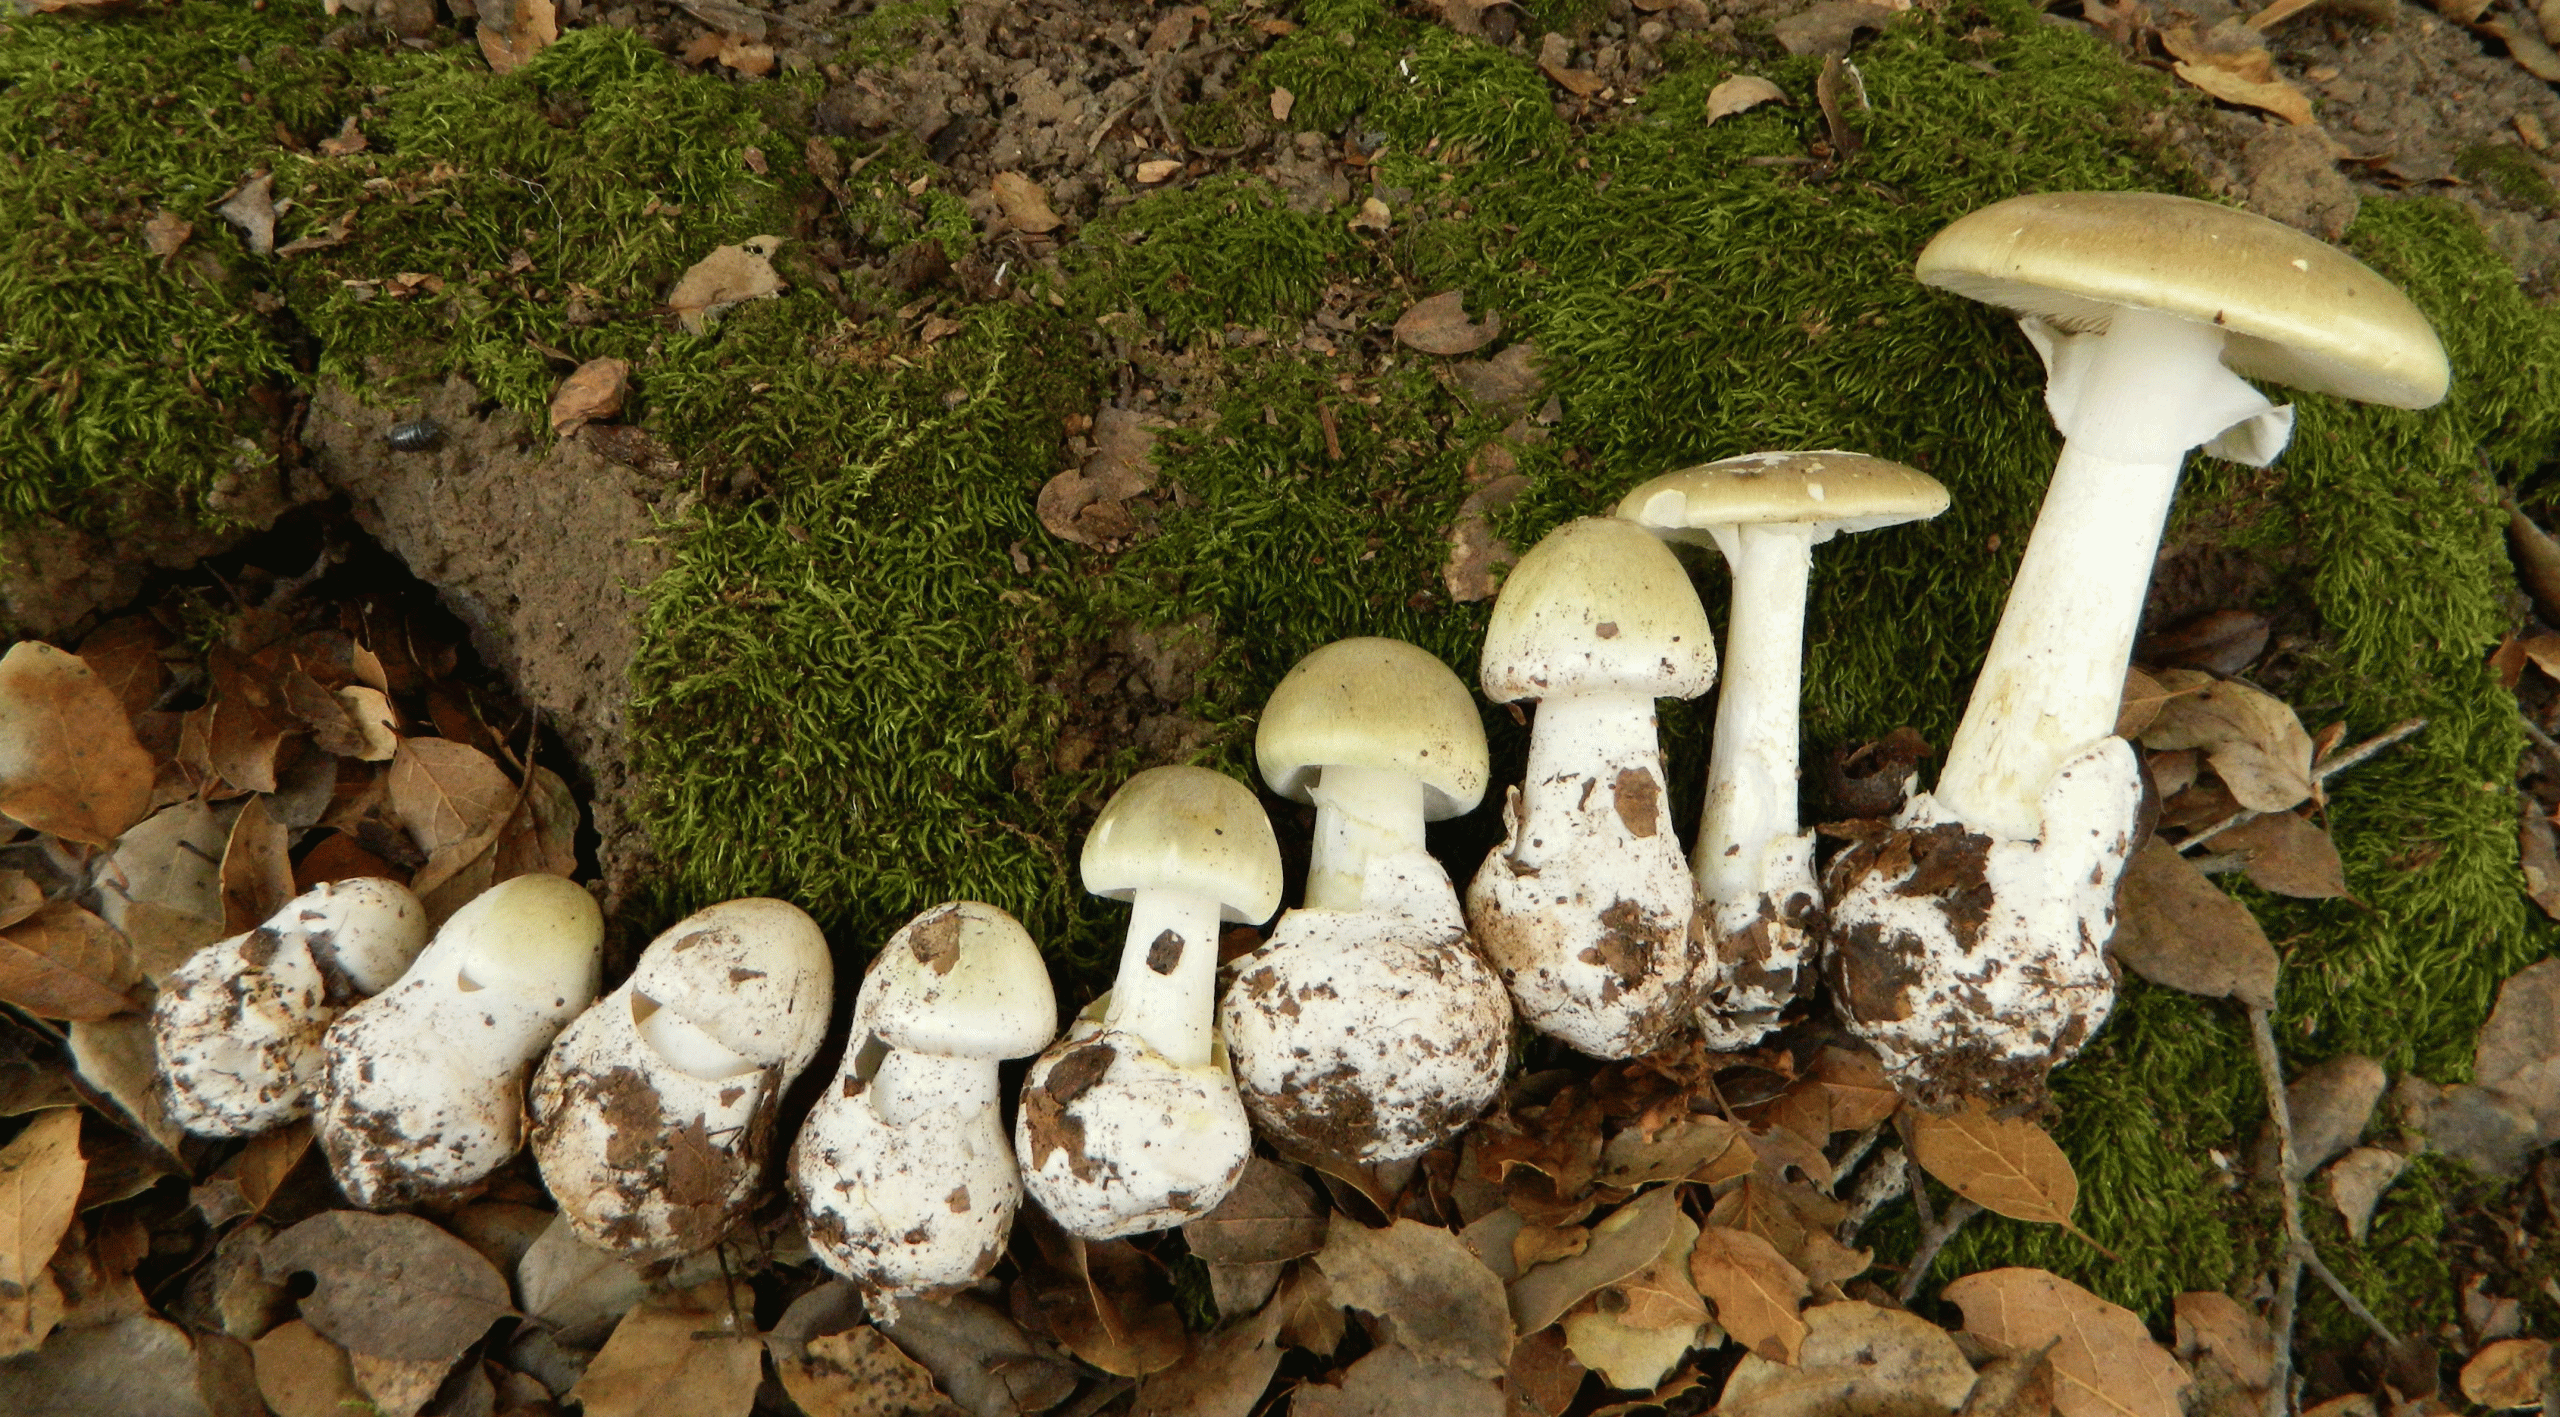 Amanita species like the Death Cap Amanita phalloides mushrooms